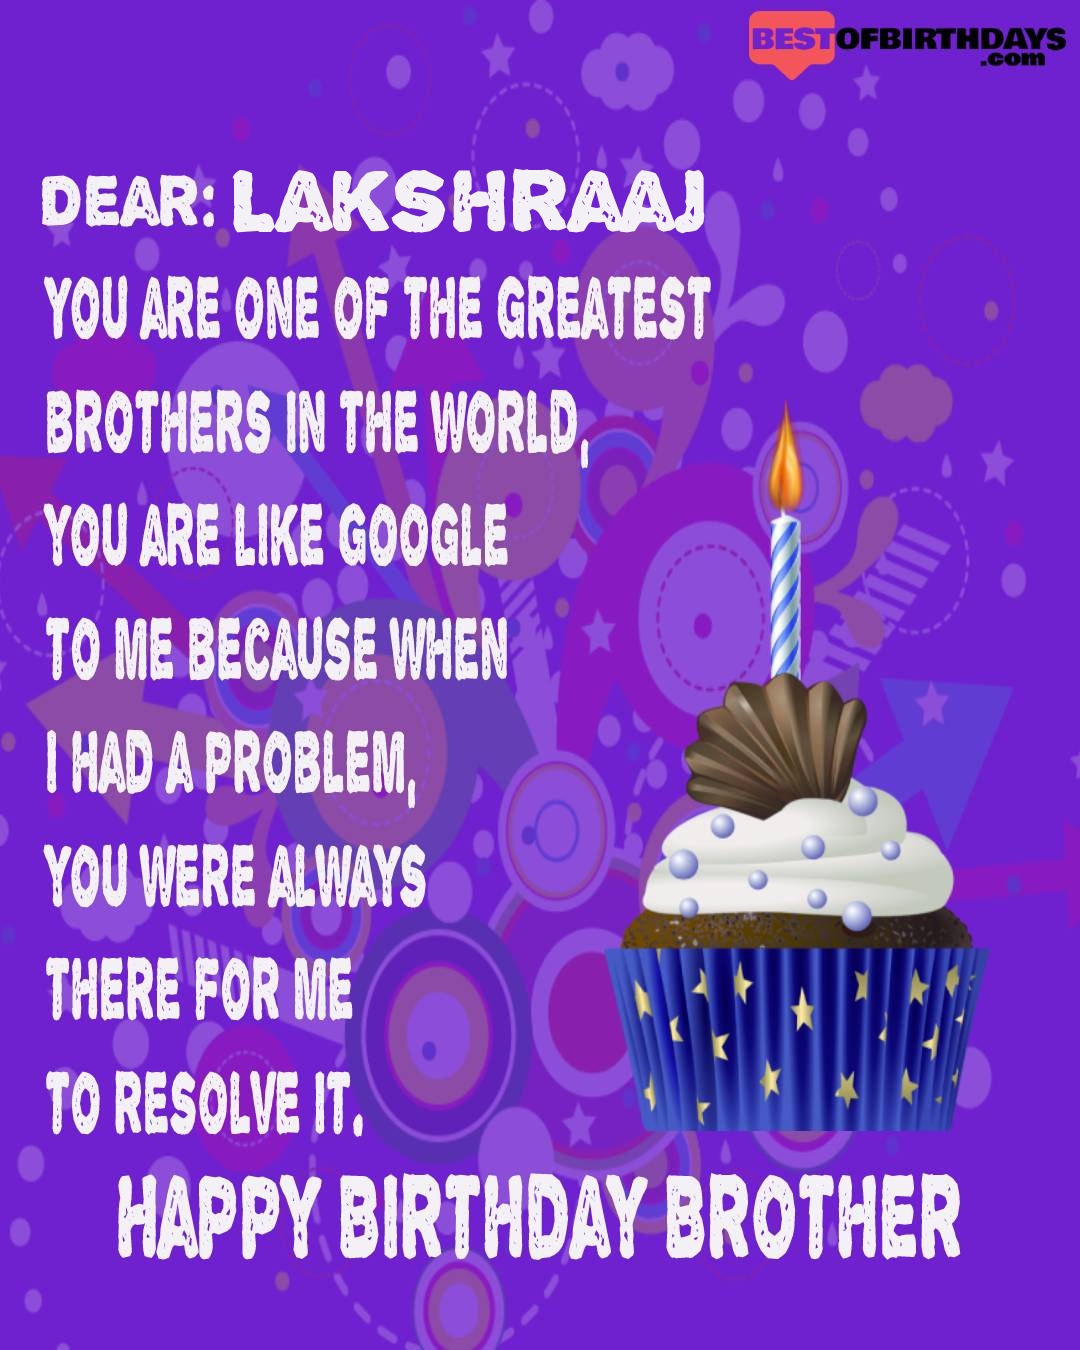 Happy birthday lakshraaj bhai brother bro